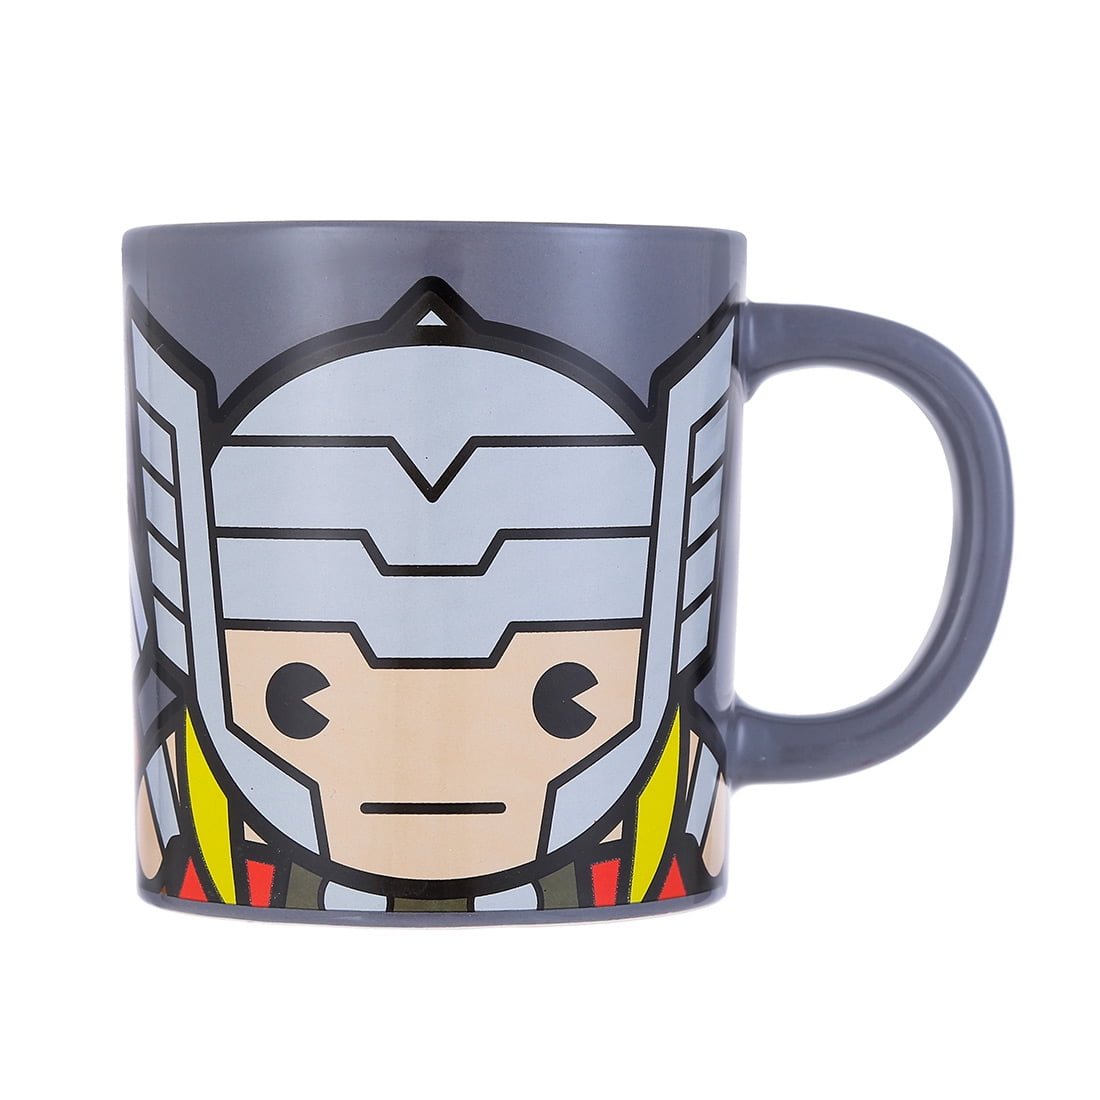 MINISO Marvel Ceramic Coffee Mug, 13oz Tea Cup for Office